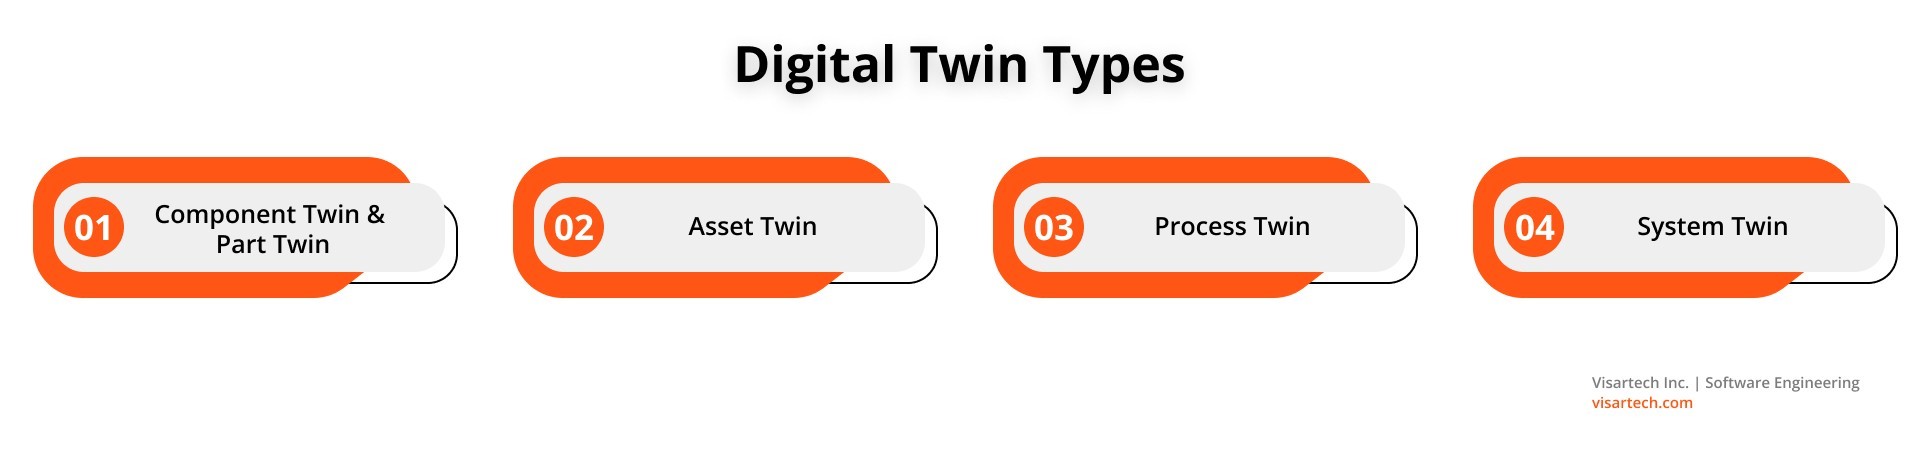 Digital Twin Types - Visartech Blog